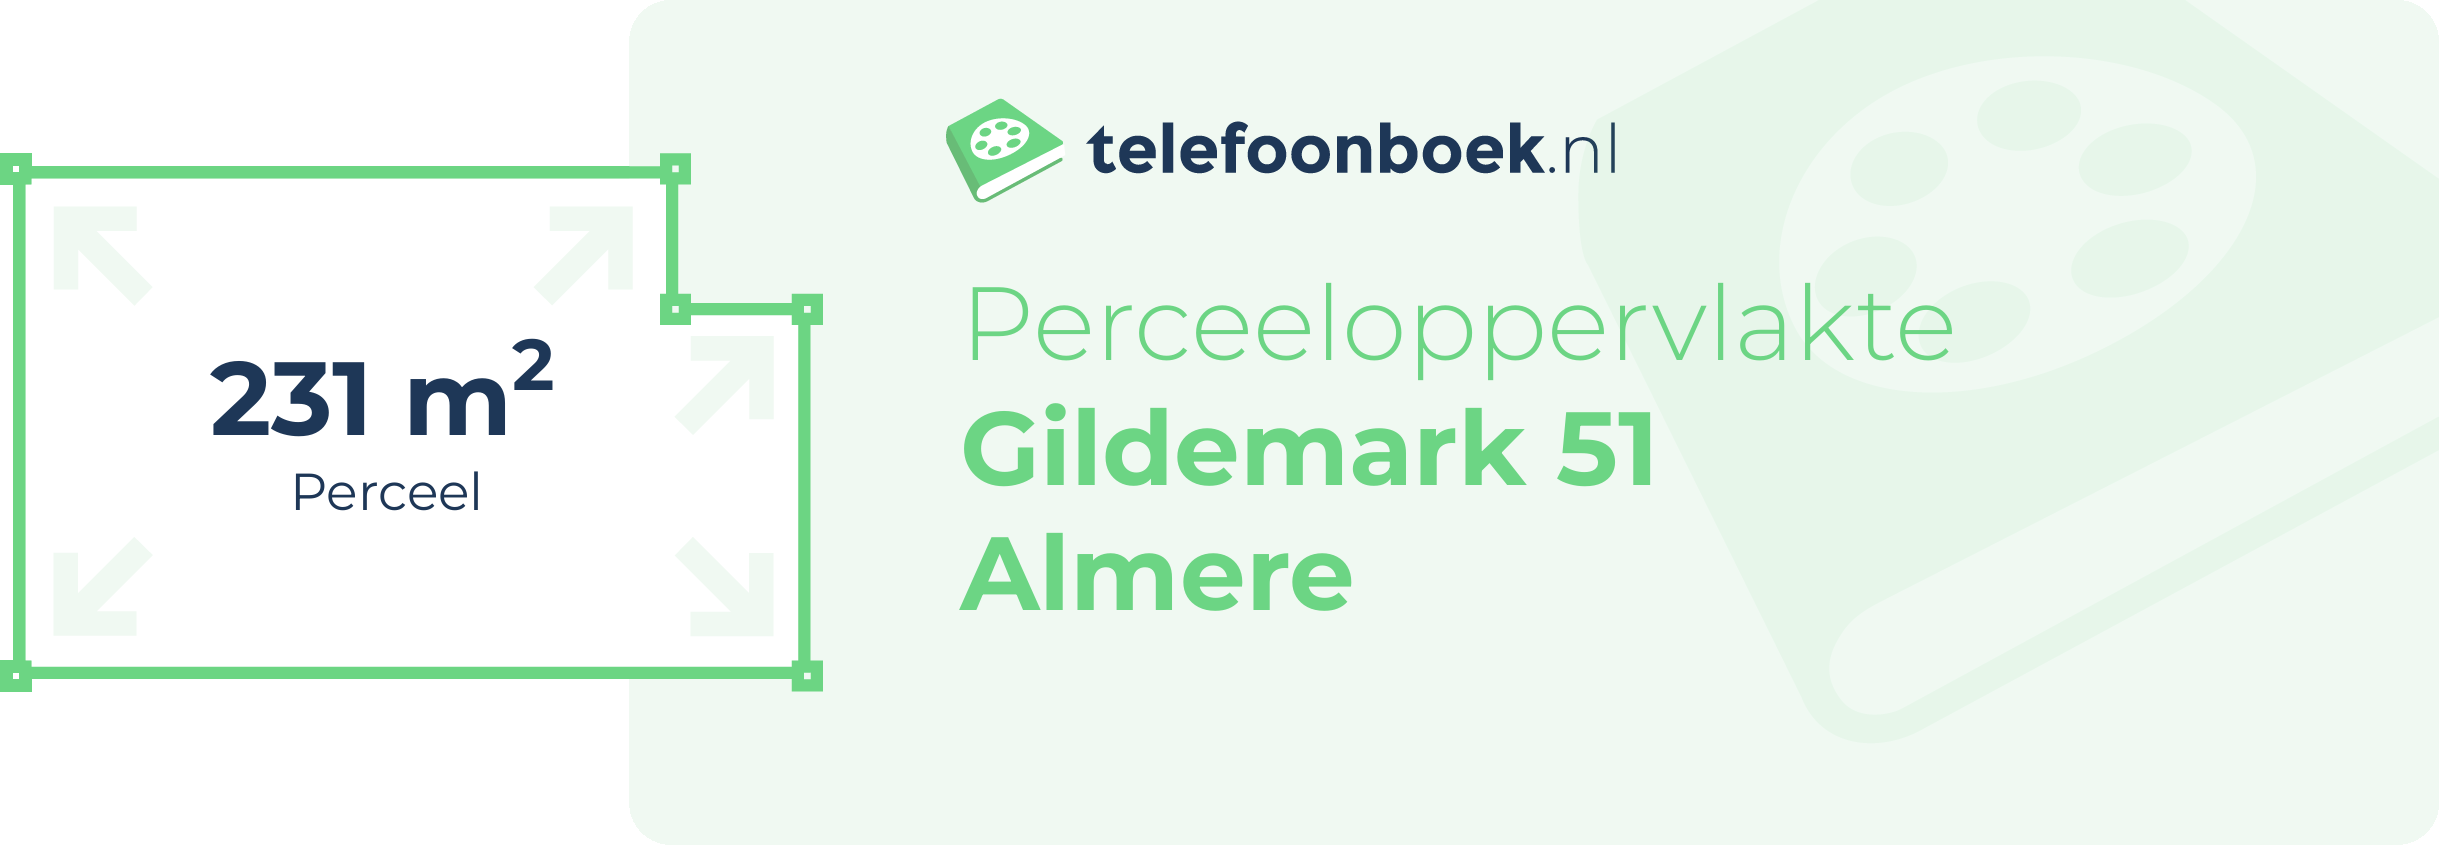 Perceeloppervlakte Gildemark 51 Almere